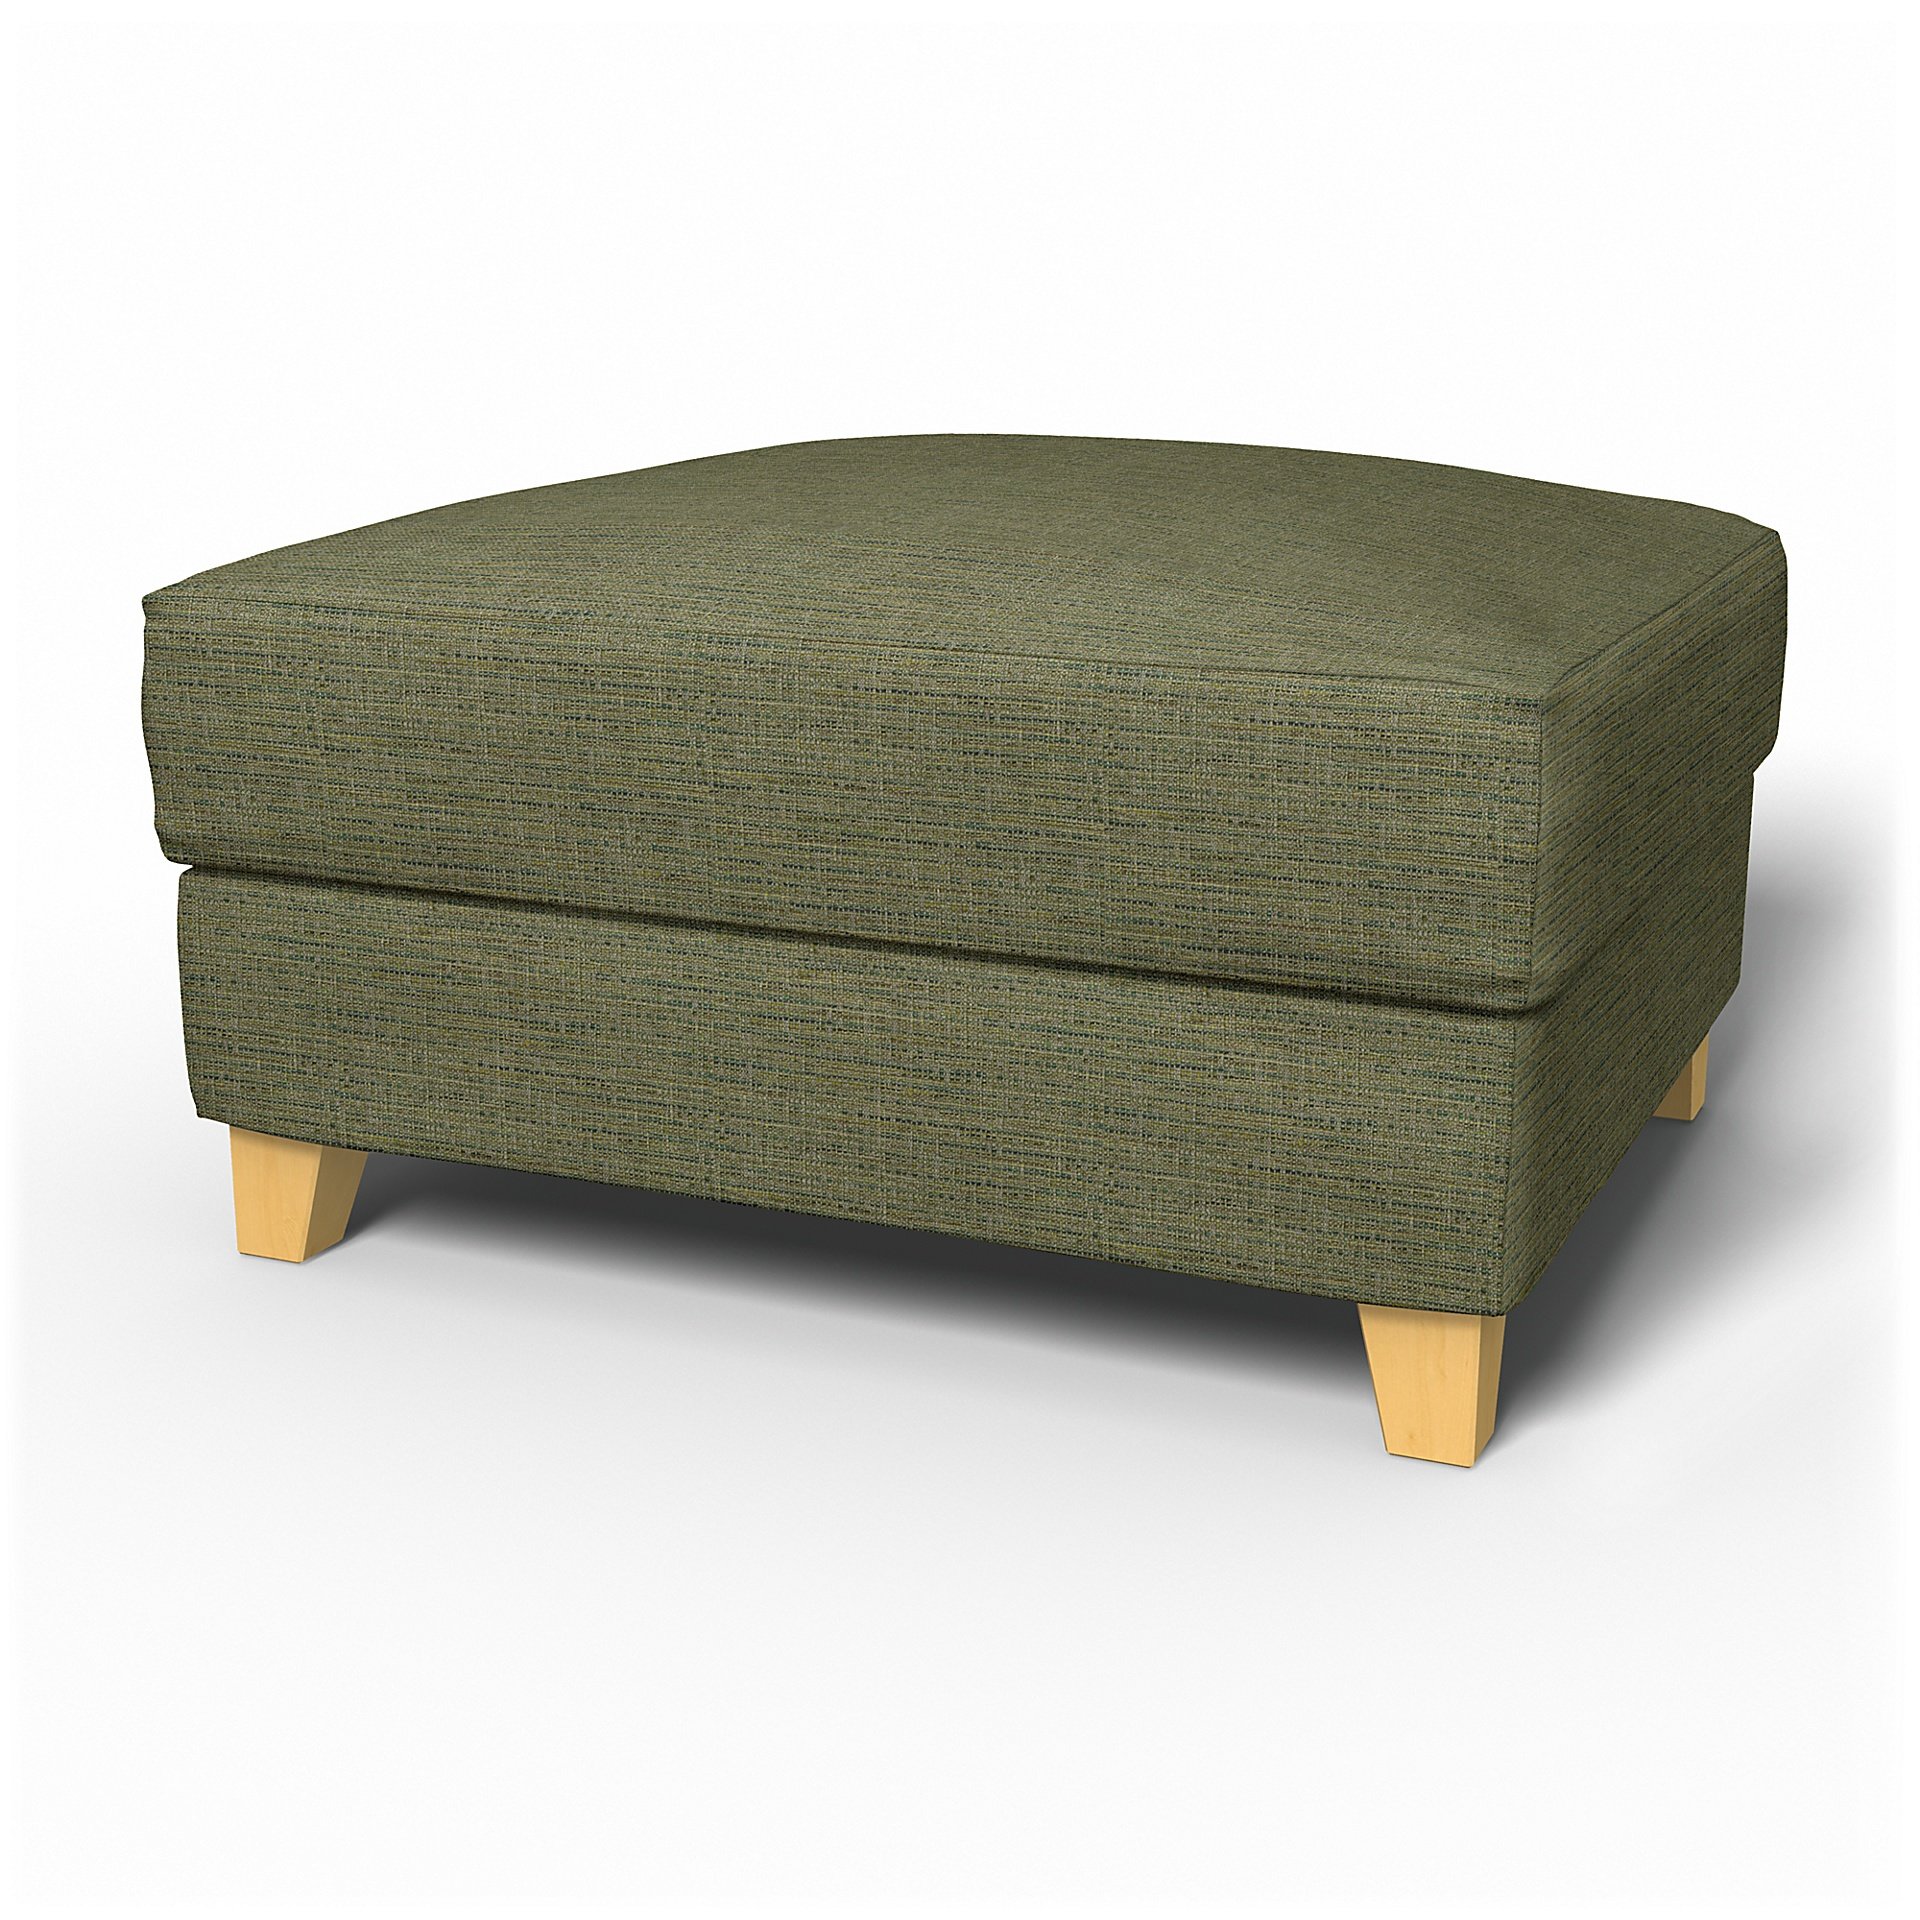 IKEA - Backa Footstool Cover, Meadow Green, Boucle & Texture - Bemz